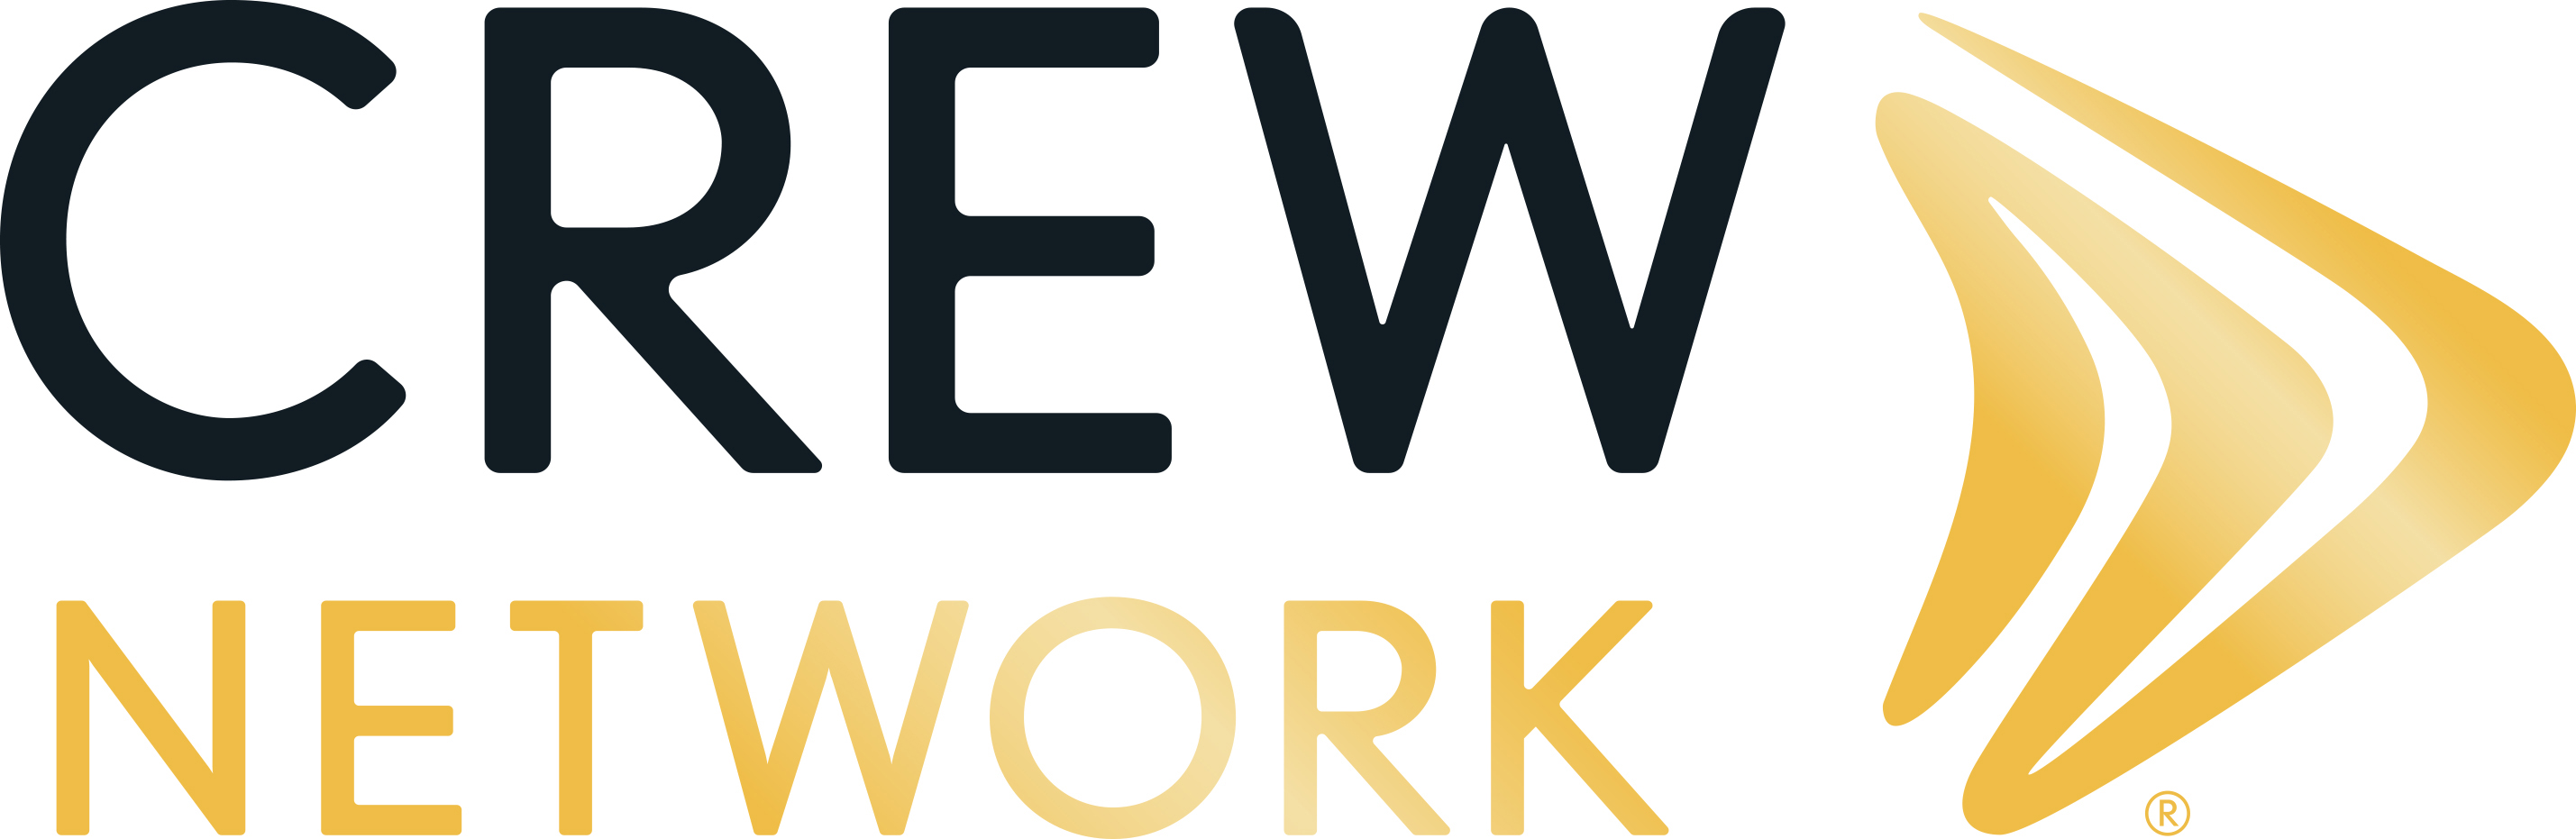 CREW Network Online Forms logo